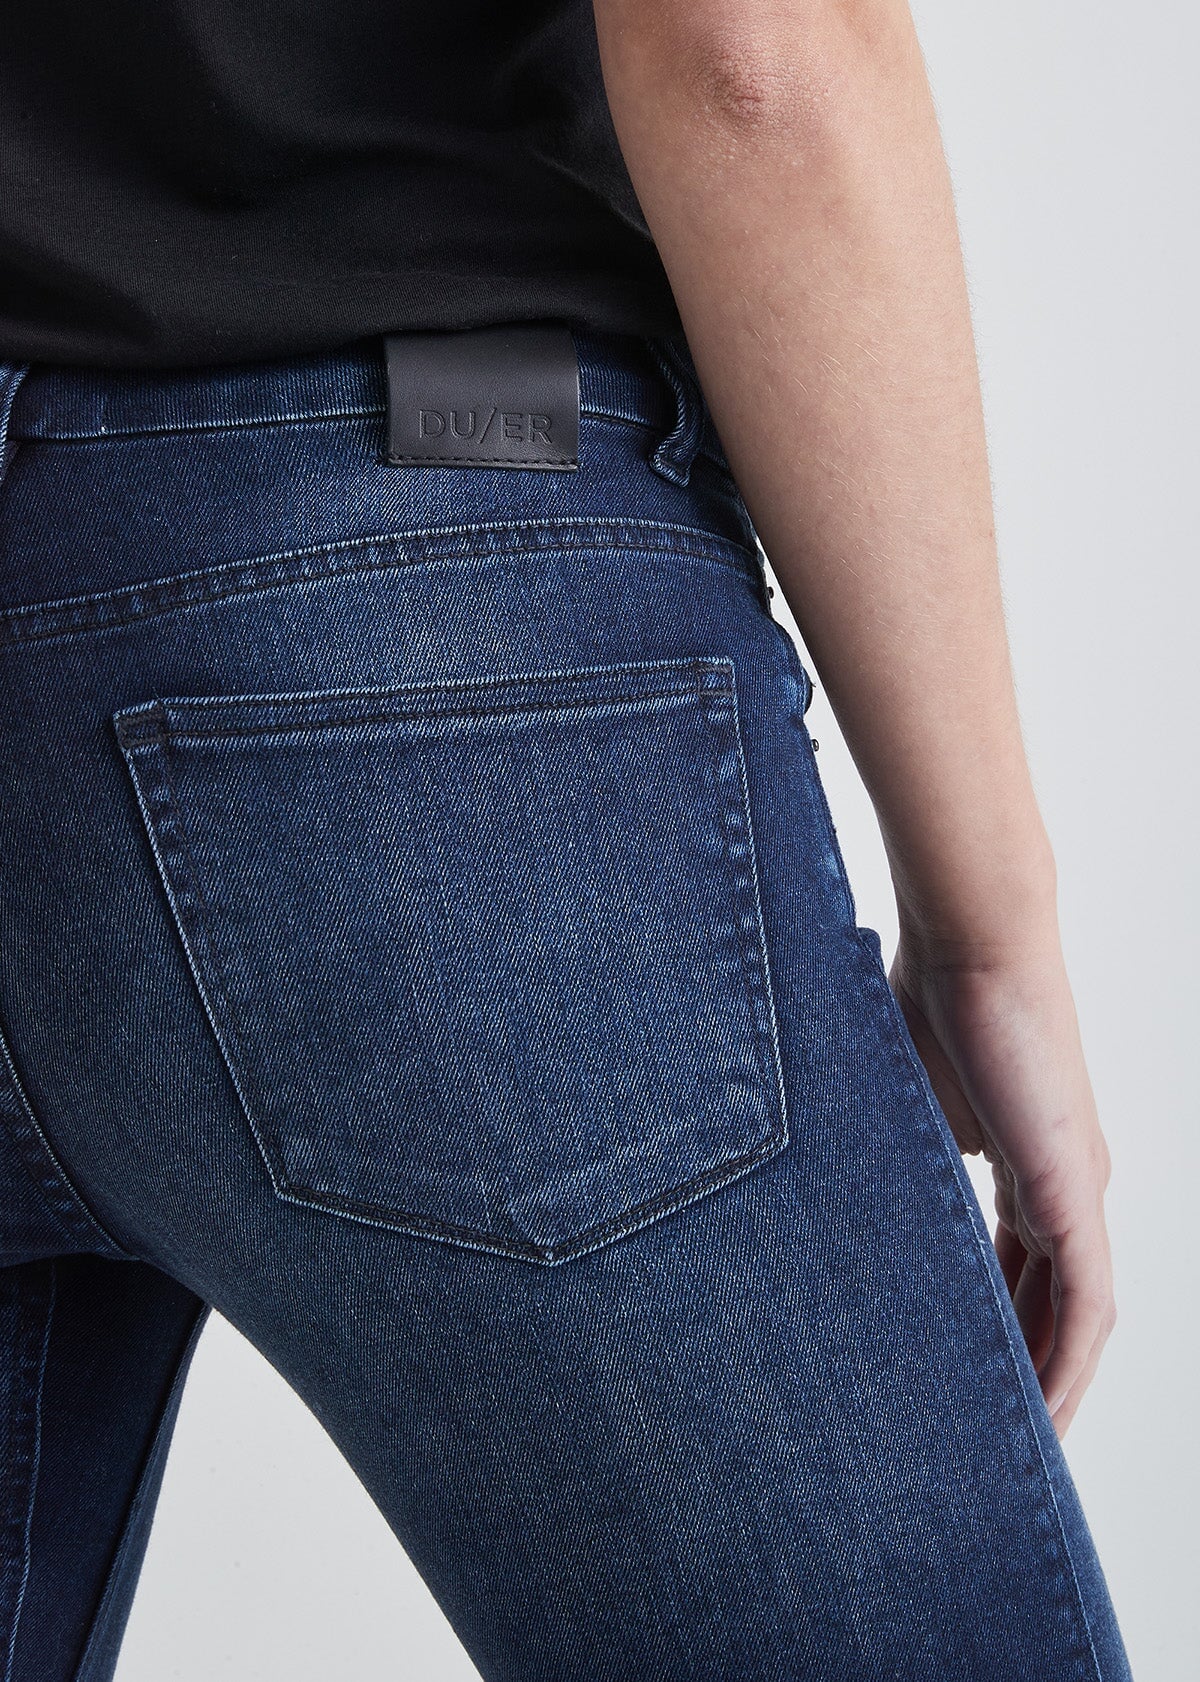 Lexi Women's Super Comfy Stretch Denim Skinny Jeans, Xps26122sk